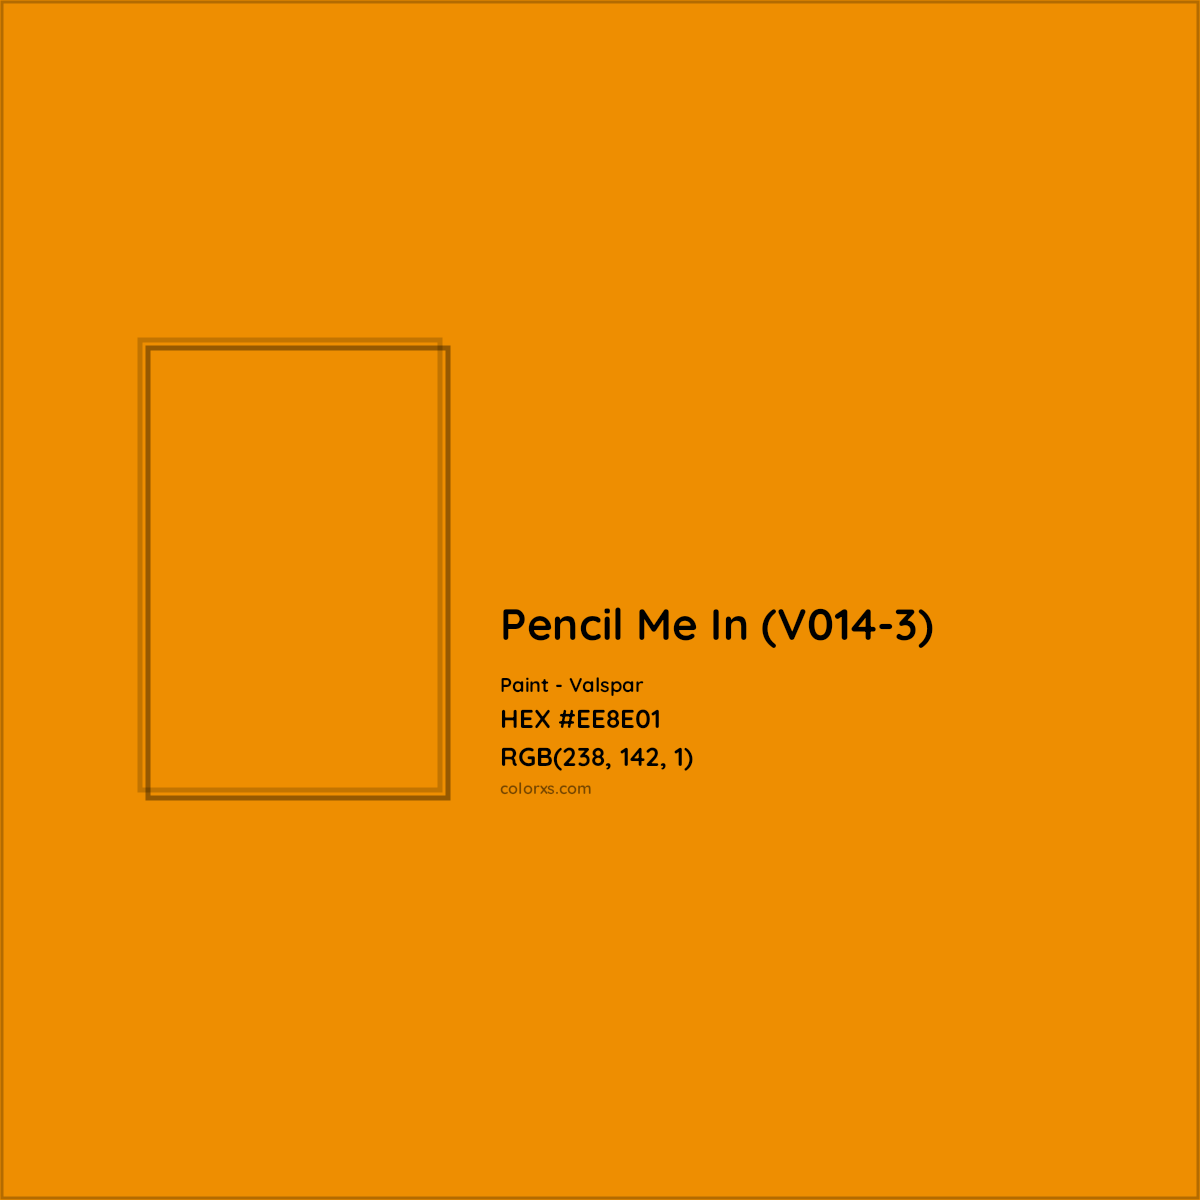 HEX #EE8E01 Pencil Me In (V014-3) Paint Valspar - Color Code